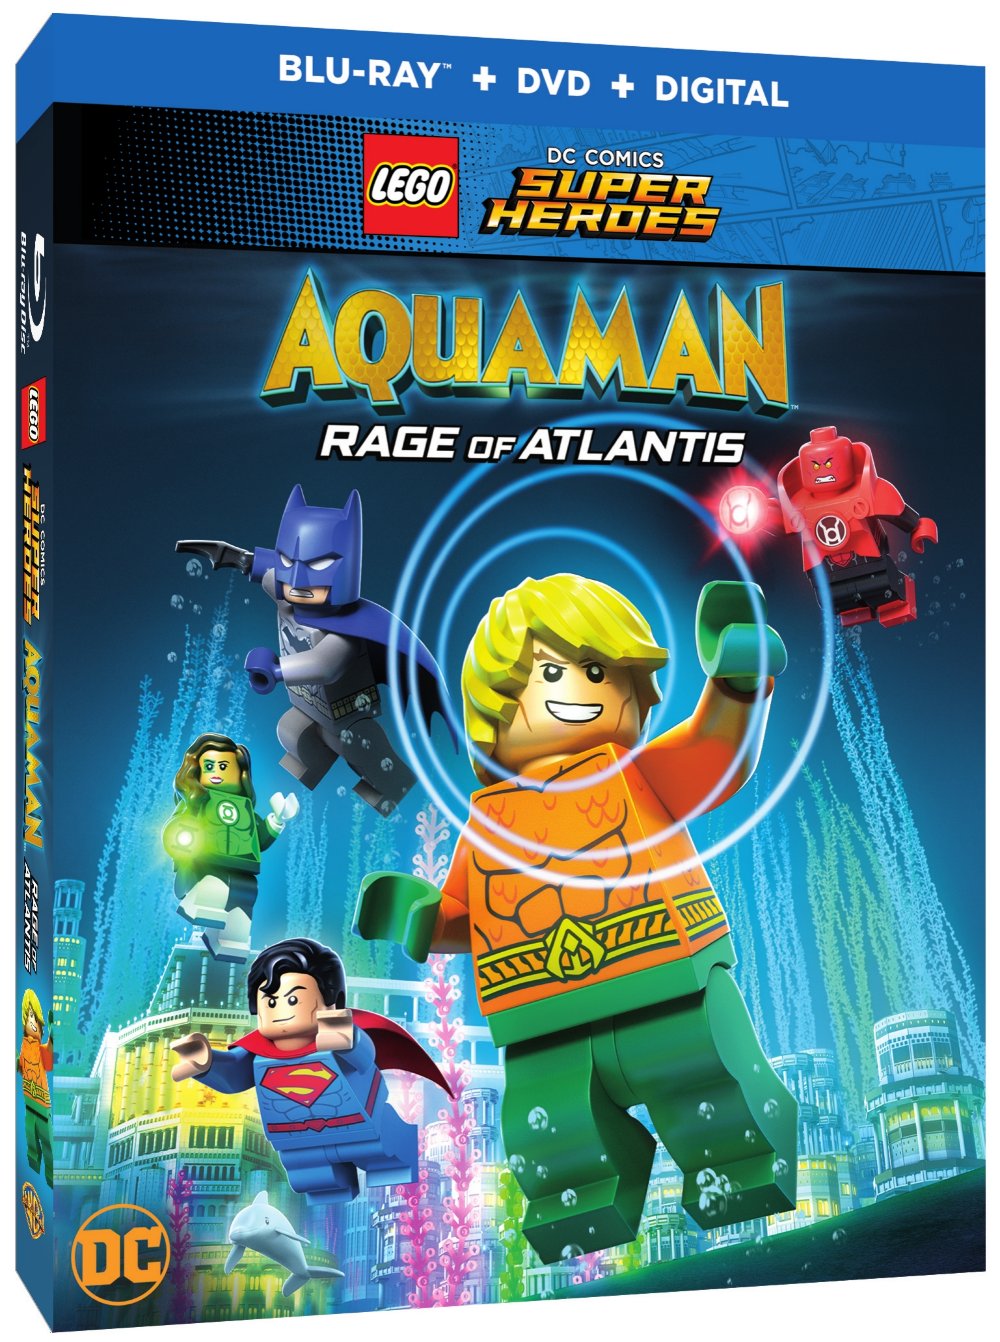 Lego DC Comics Super Heroes Aquaman Rage of Atlantis DVD Blu-ray